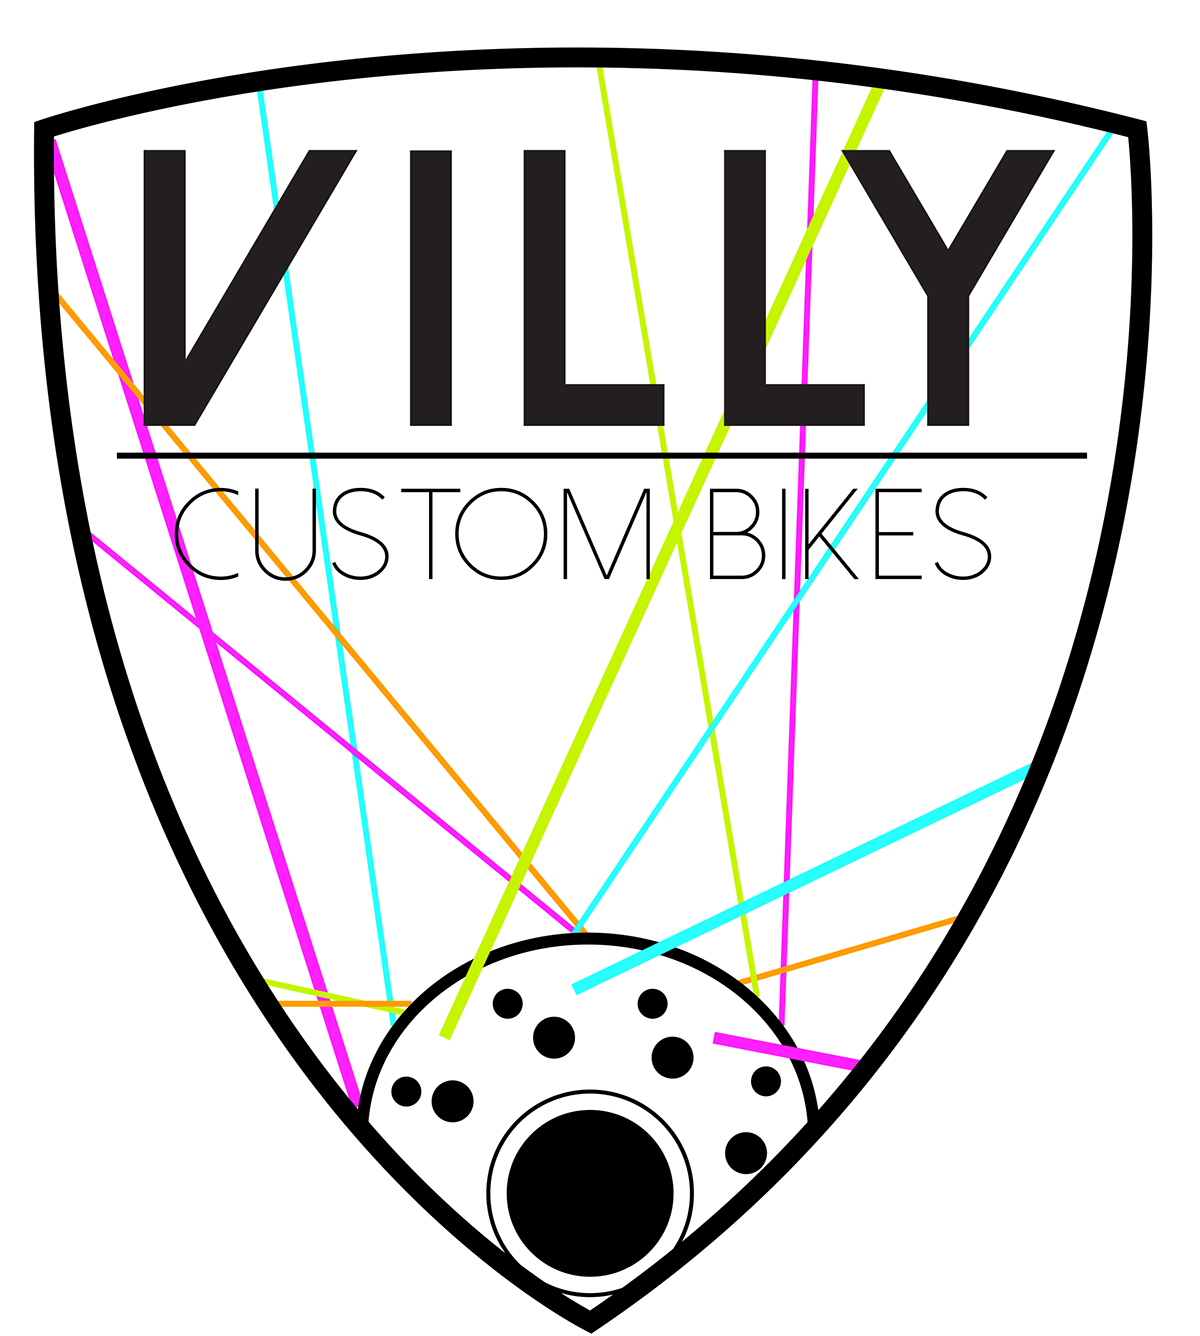 villy Custom bikes Rebrand Project Oakland University